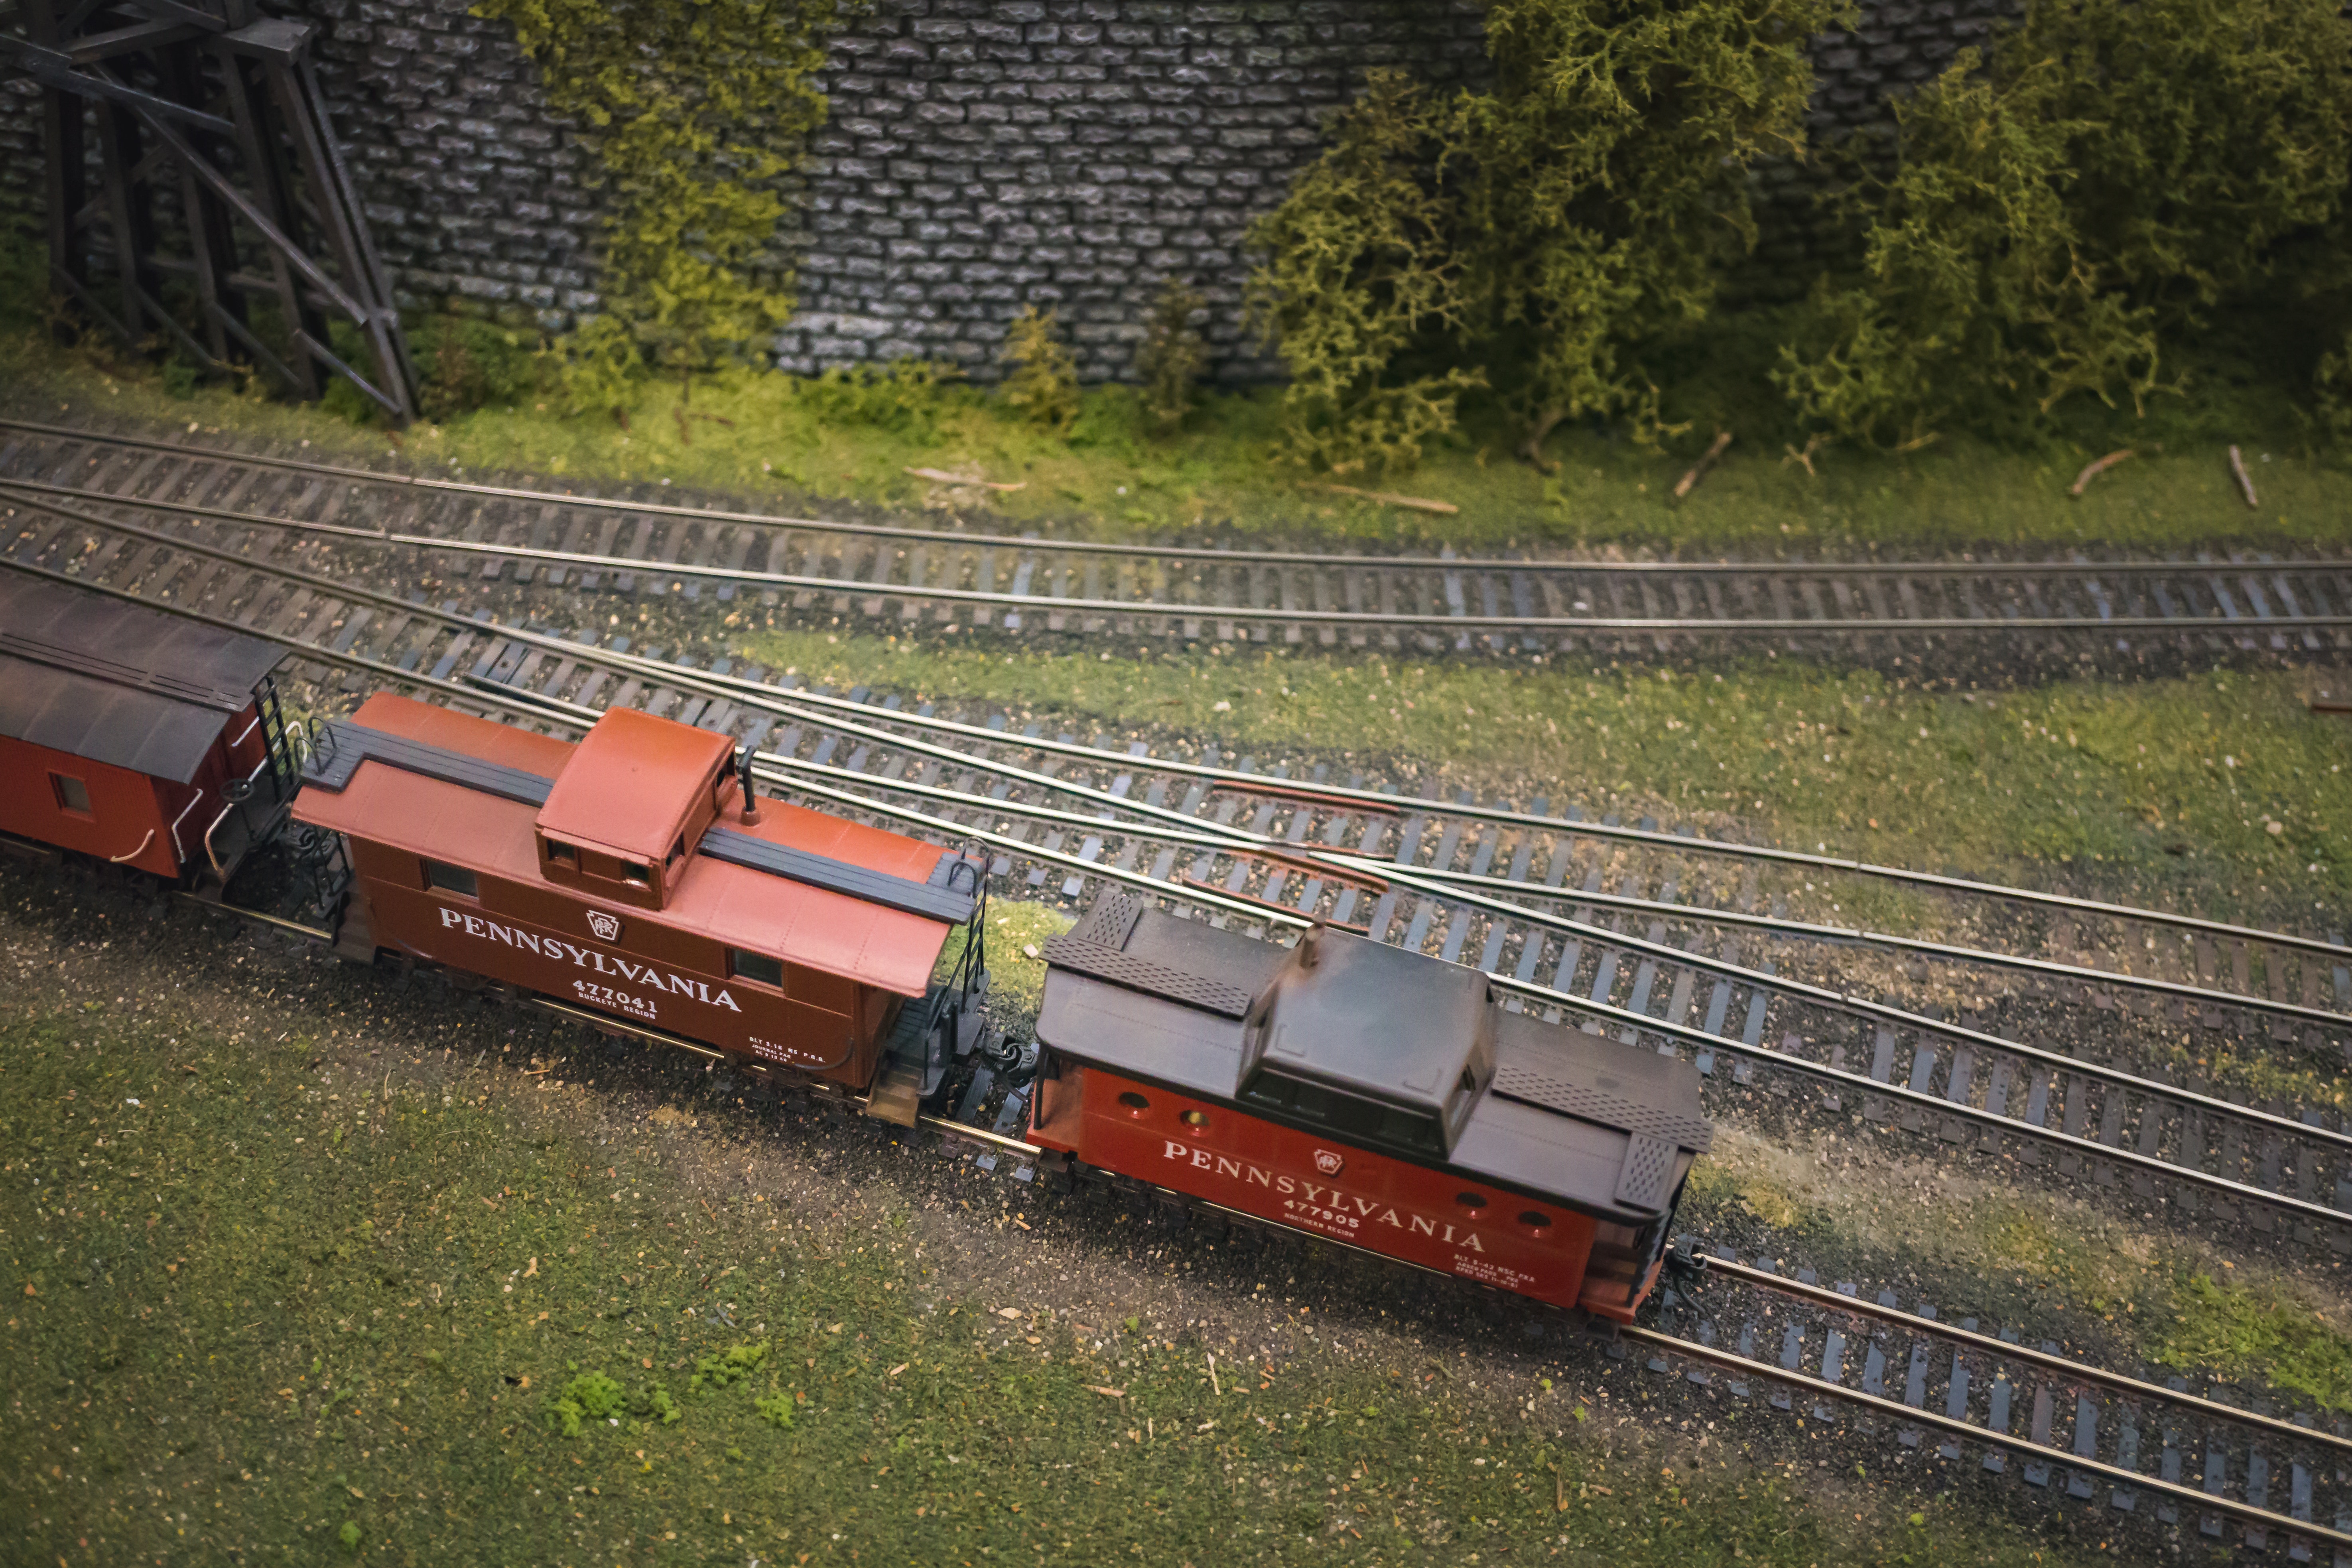 La imagen muestra una maqueta de un tren de juguete.